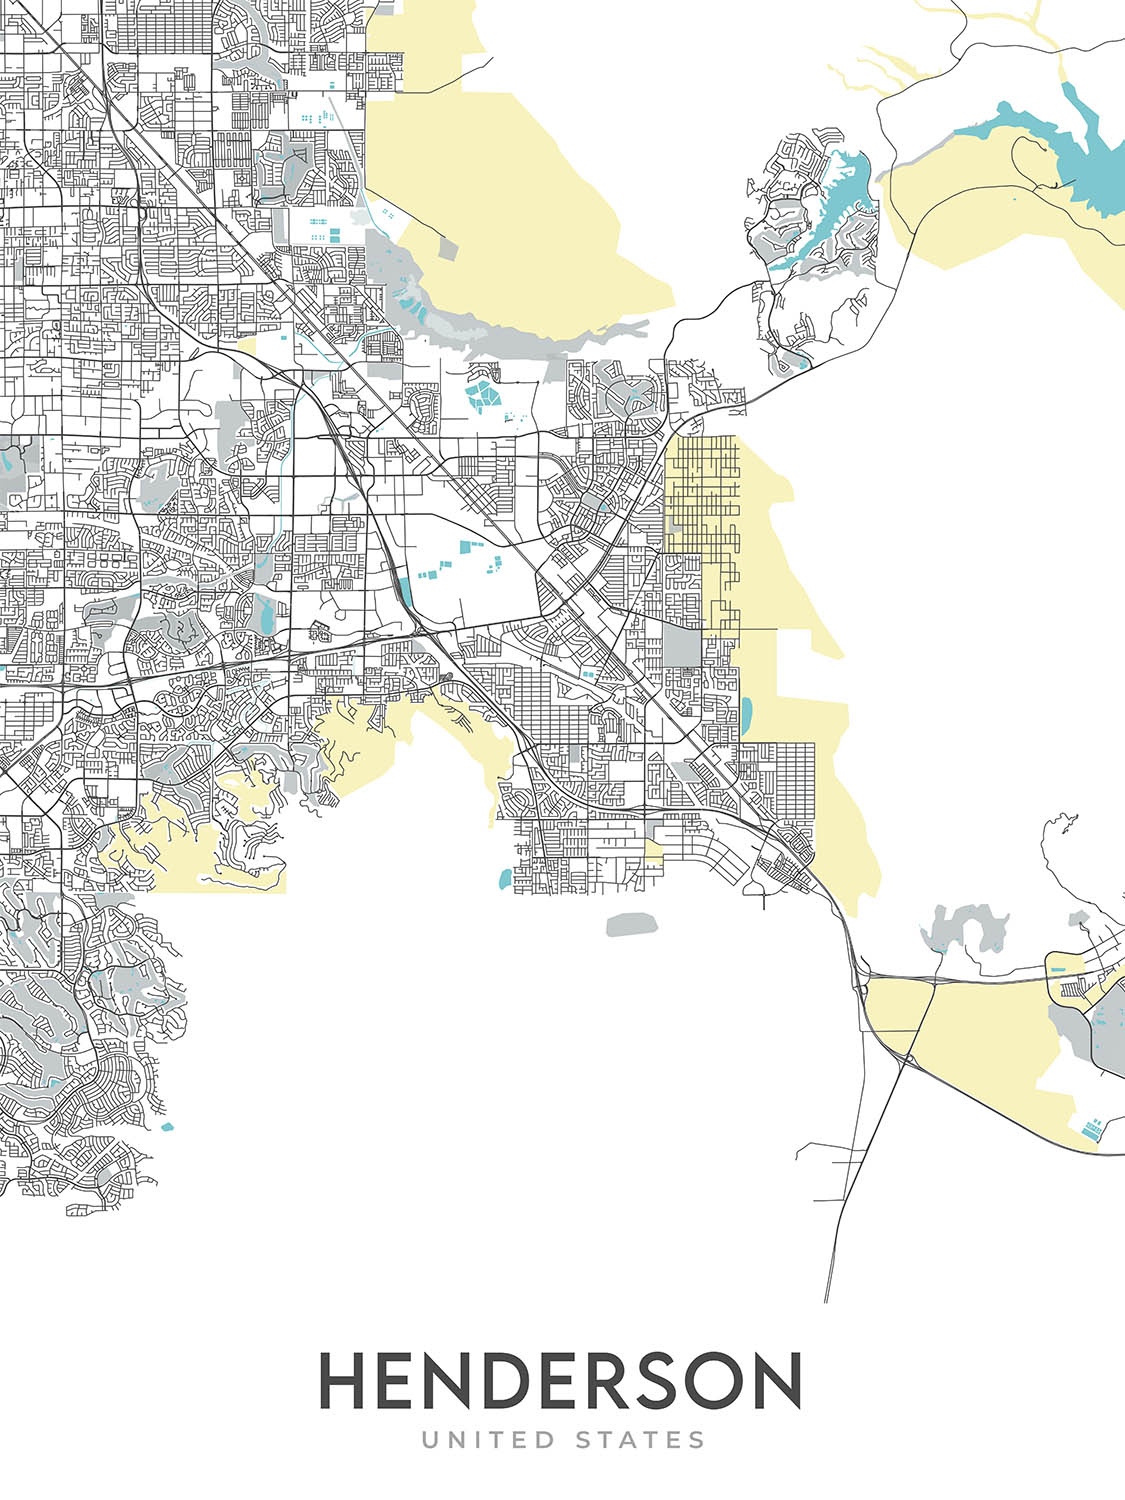 Modern City Map of Henderson, NV: Anthem, Boulder City, Green Valley, Lake Las Vegas, Sunset Rd